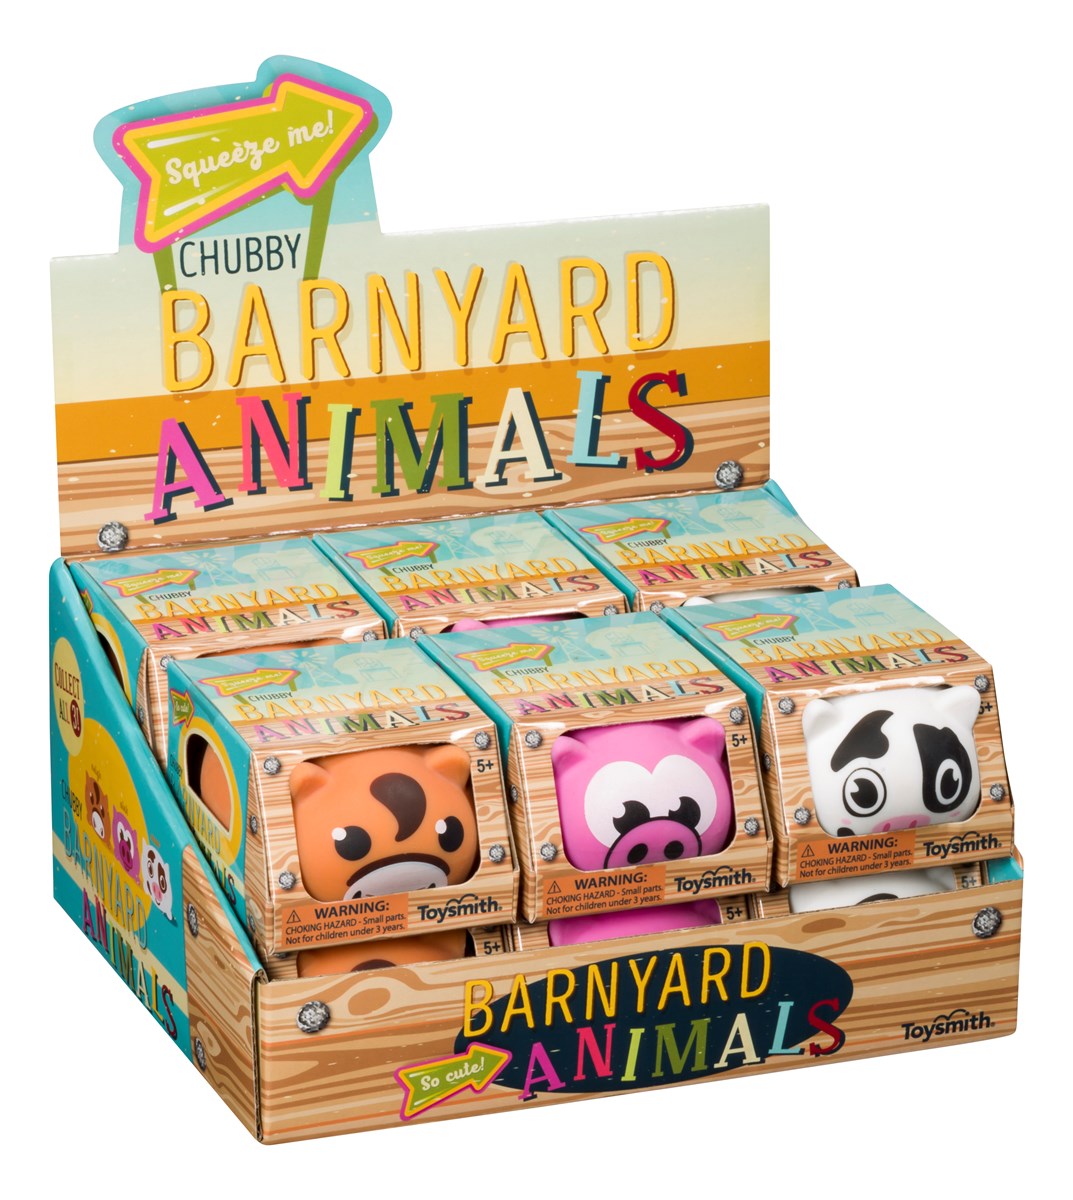 Chubby Barnyard Animals